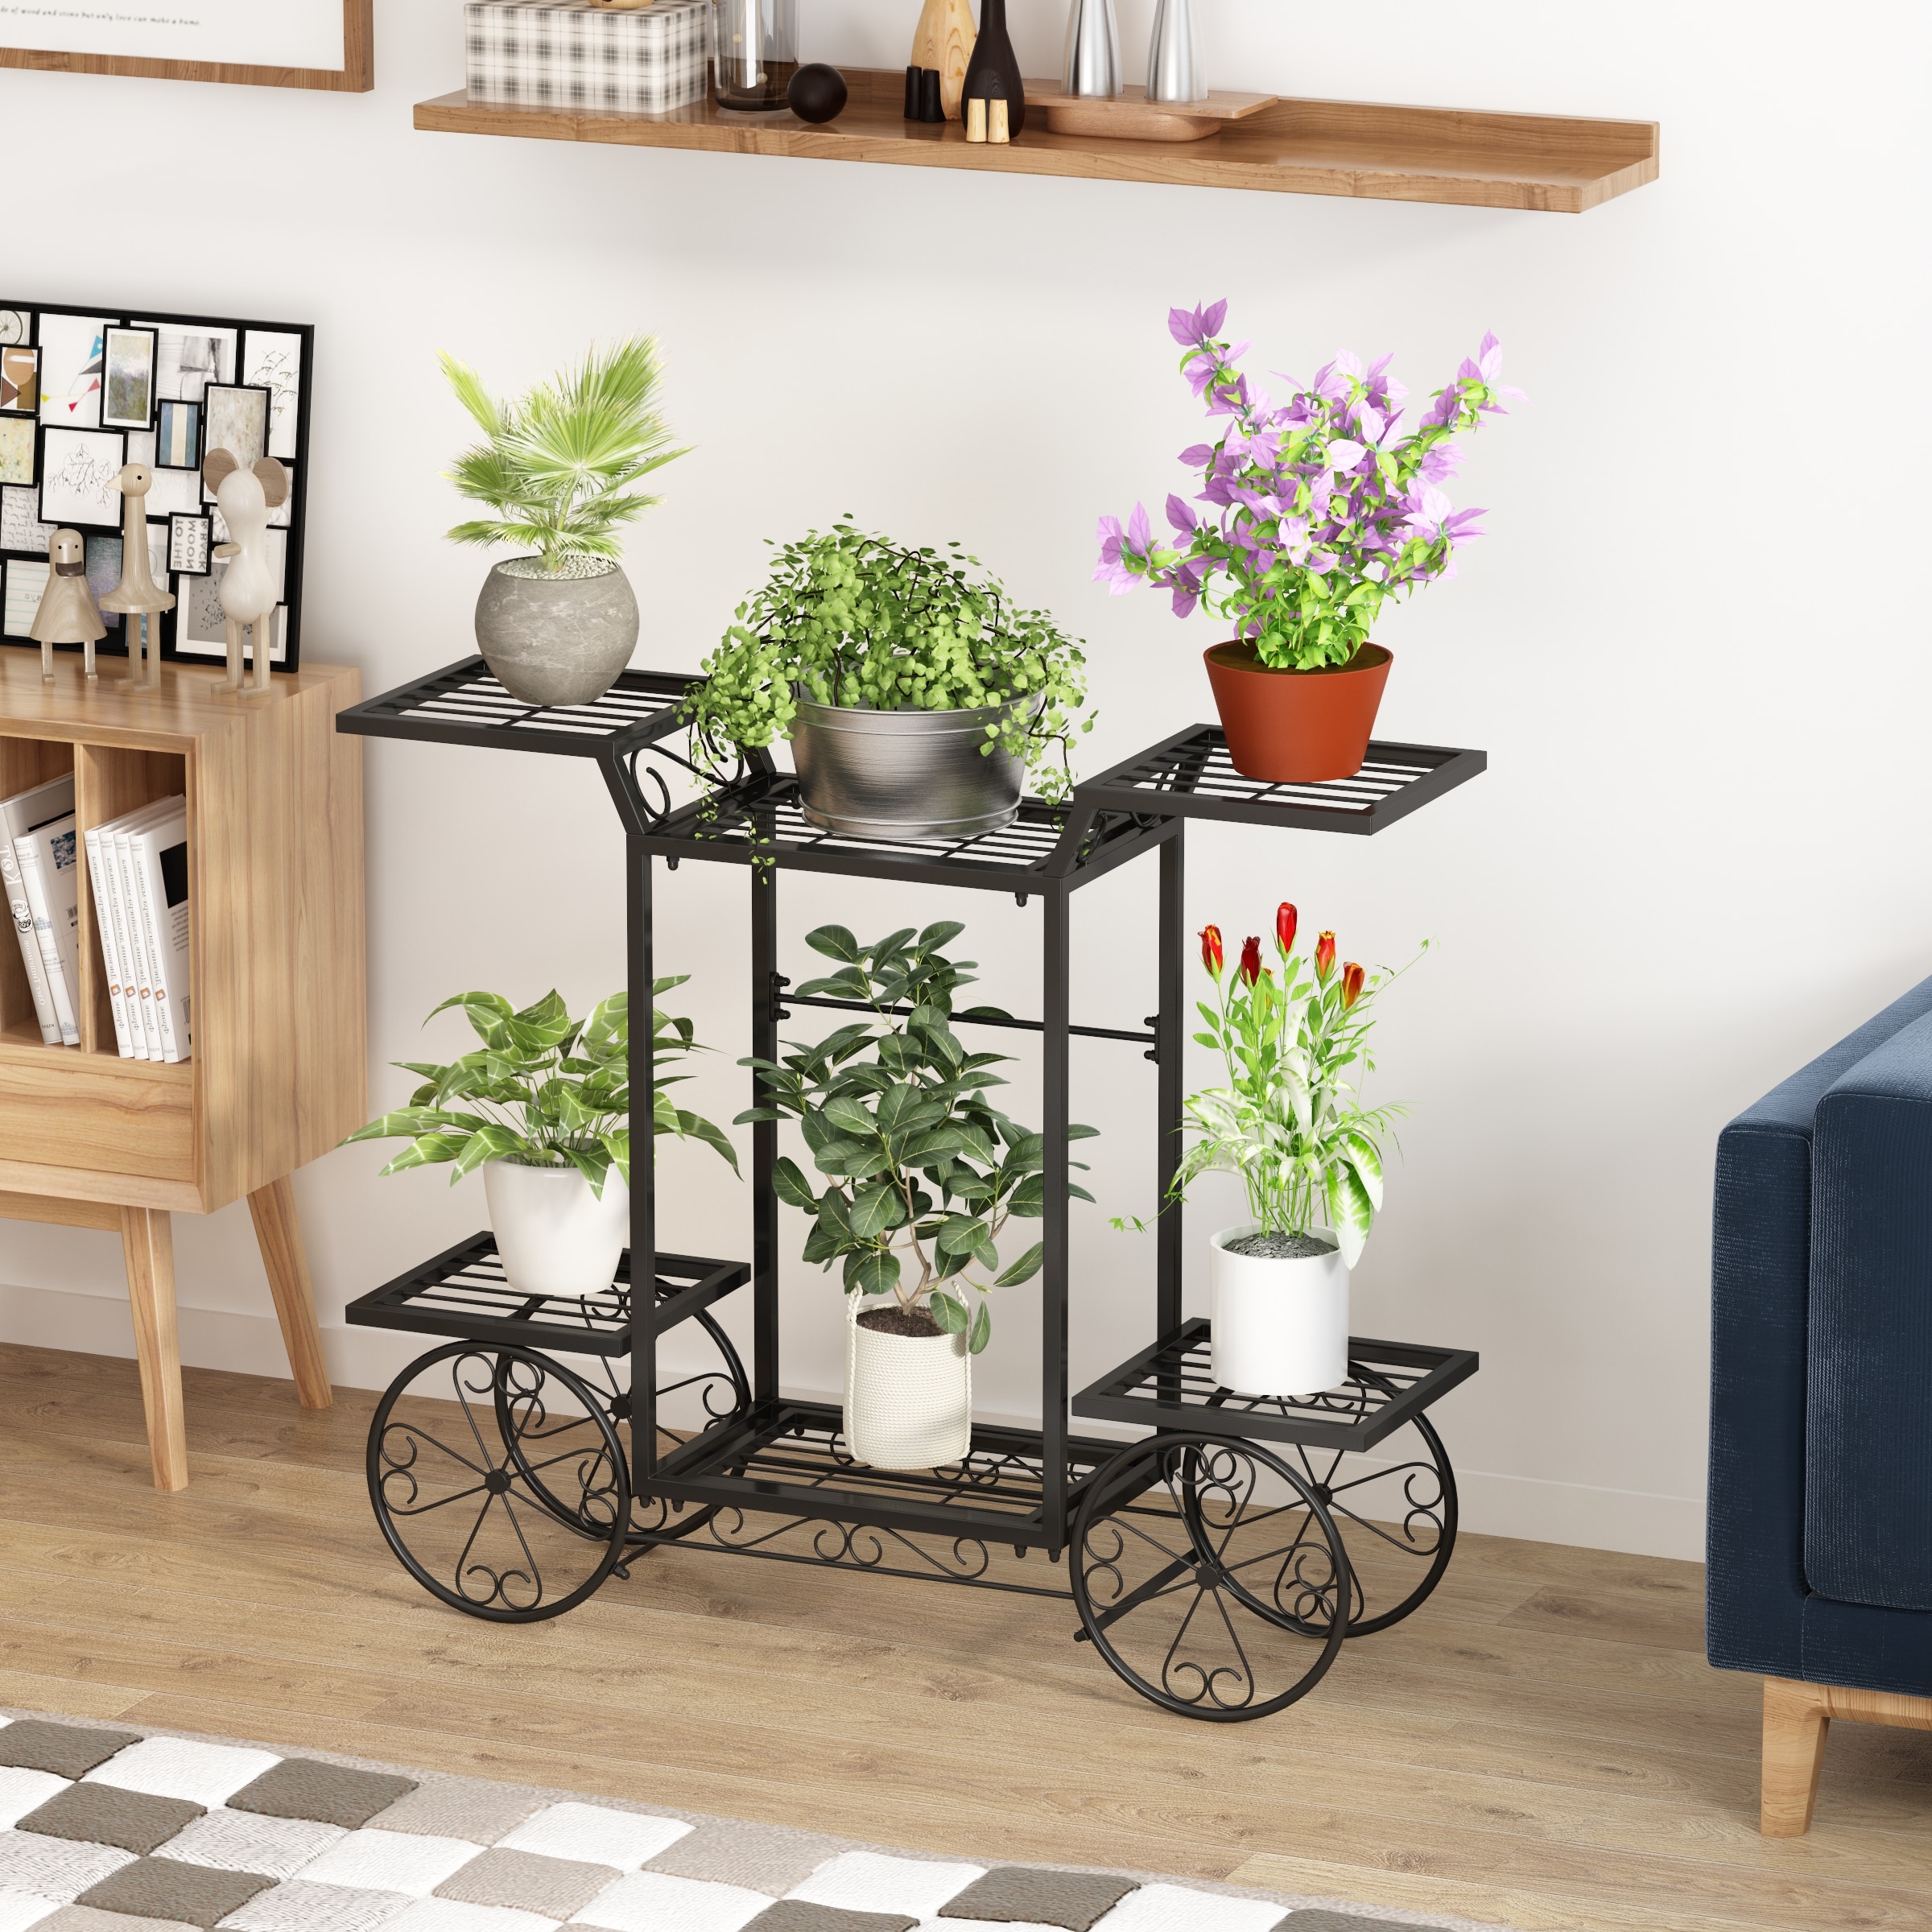 Flower Holder Racks Metal Flower Display Stand Outdoor Garden Plant Holder with 4 Tier Shelves for Indoor Black